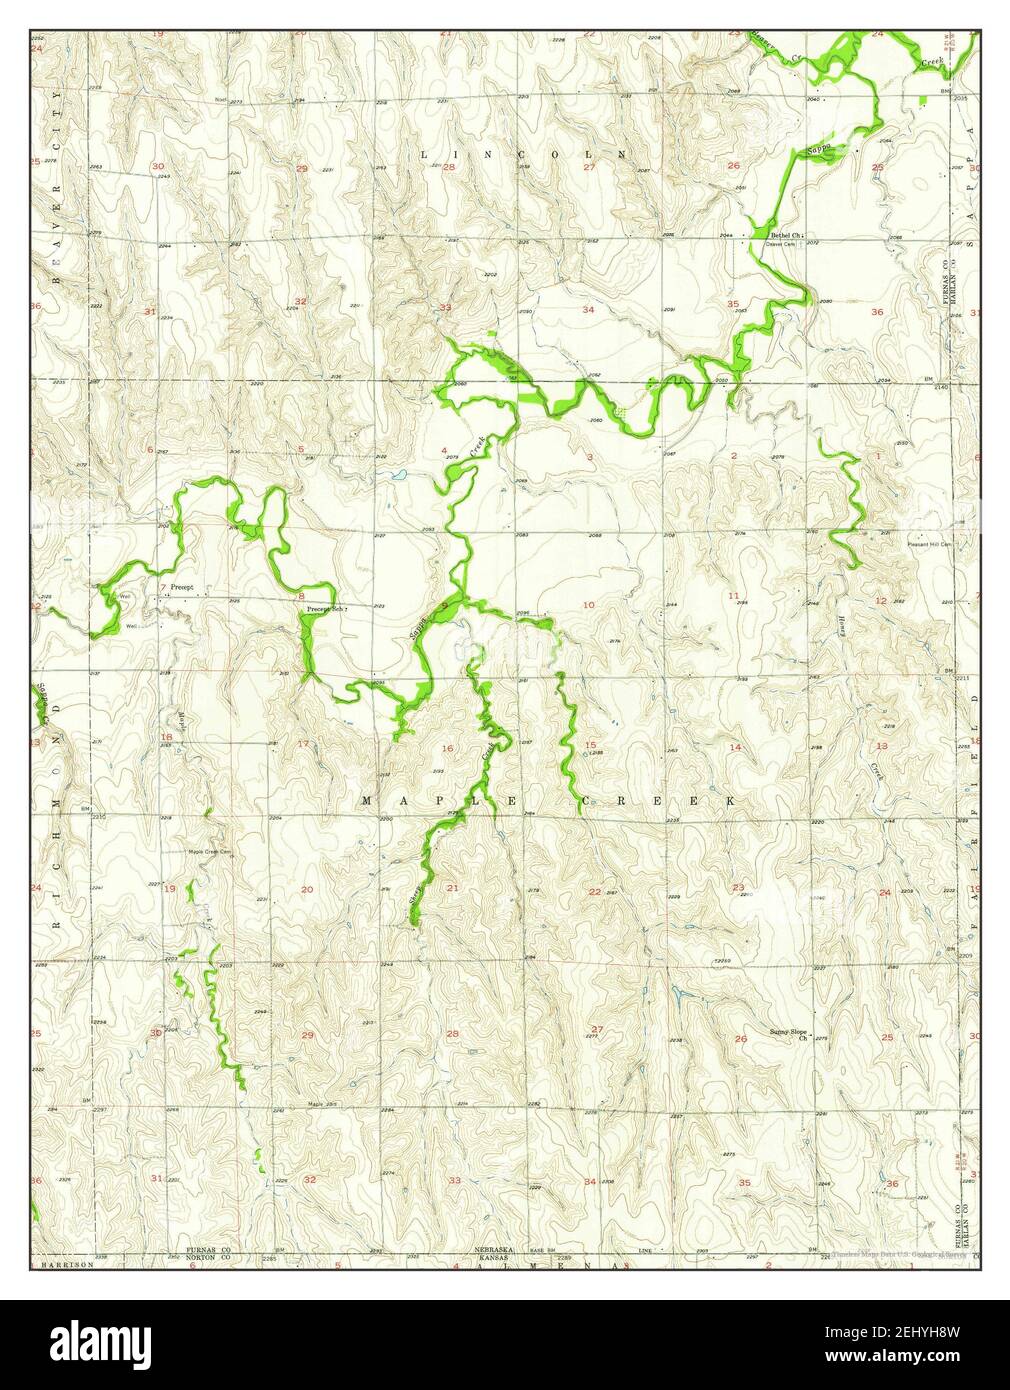 Precept, Nebraska, map 1957, 1:24000, United States of America by Timeless Maps, data U.S. Geological Survey Stock Photo